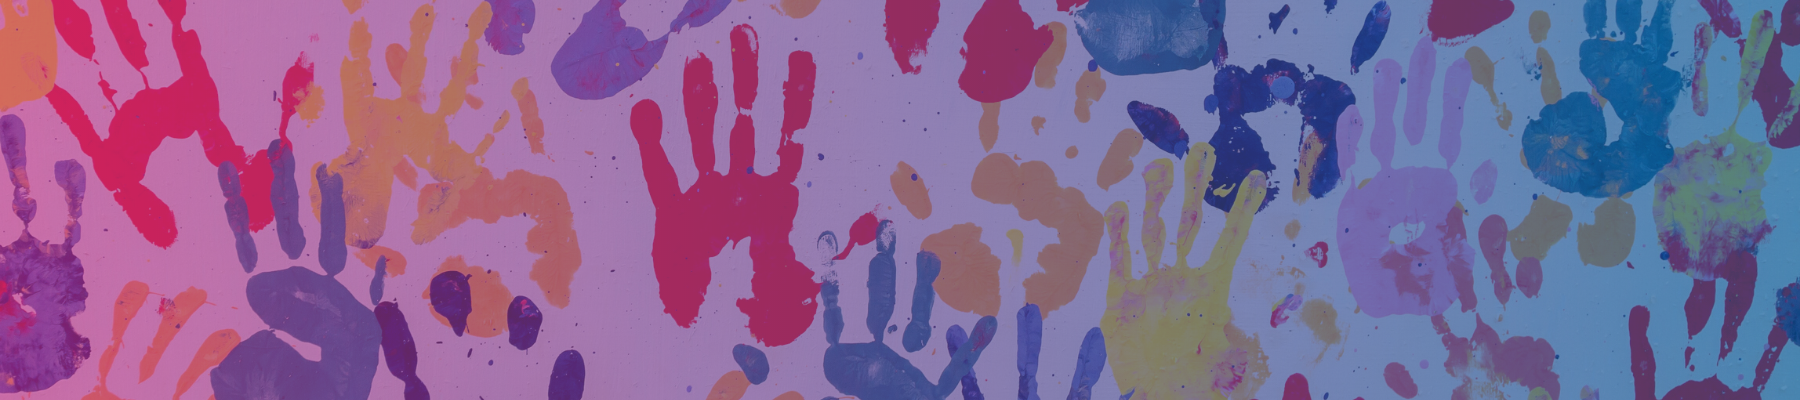 Multicoloured paint hand prints